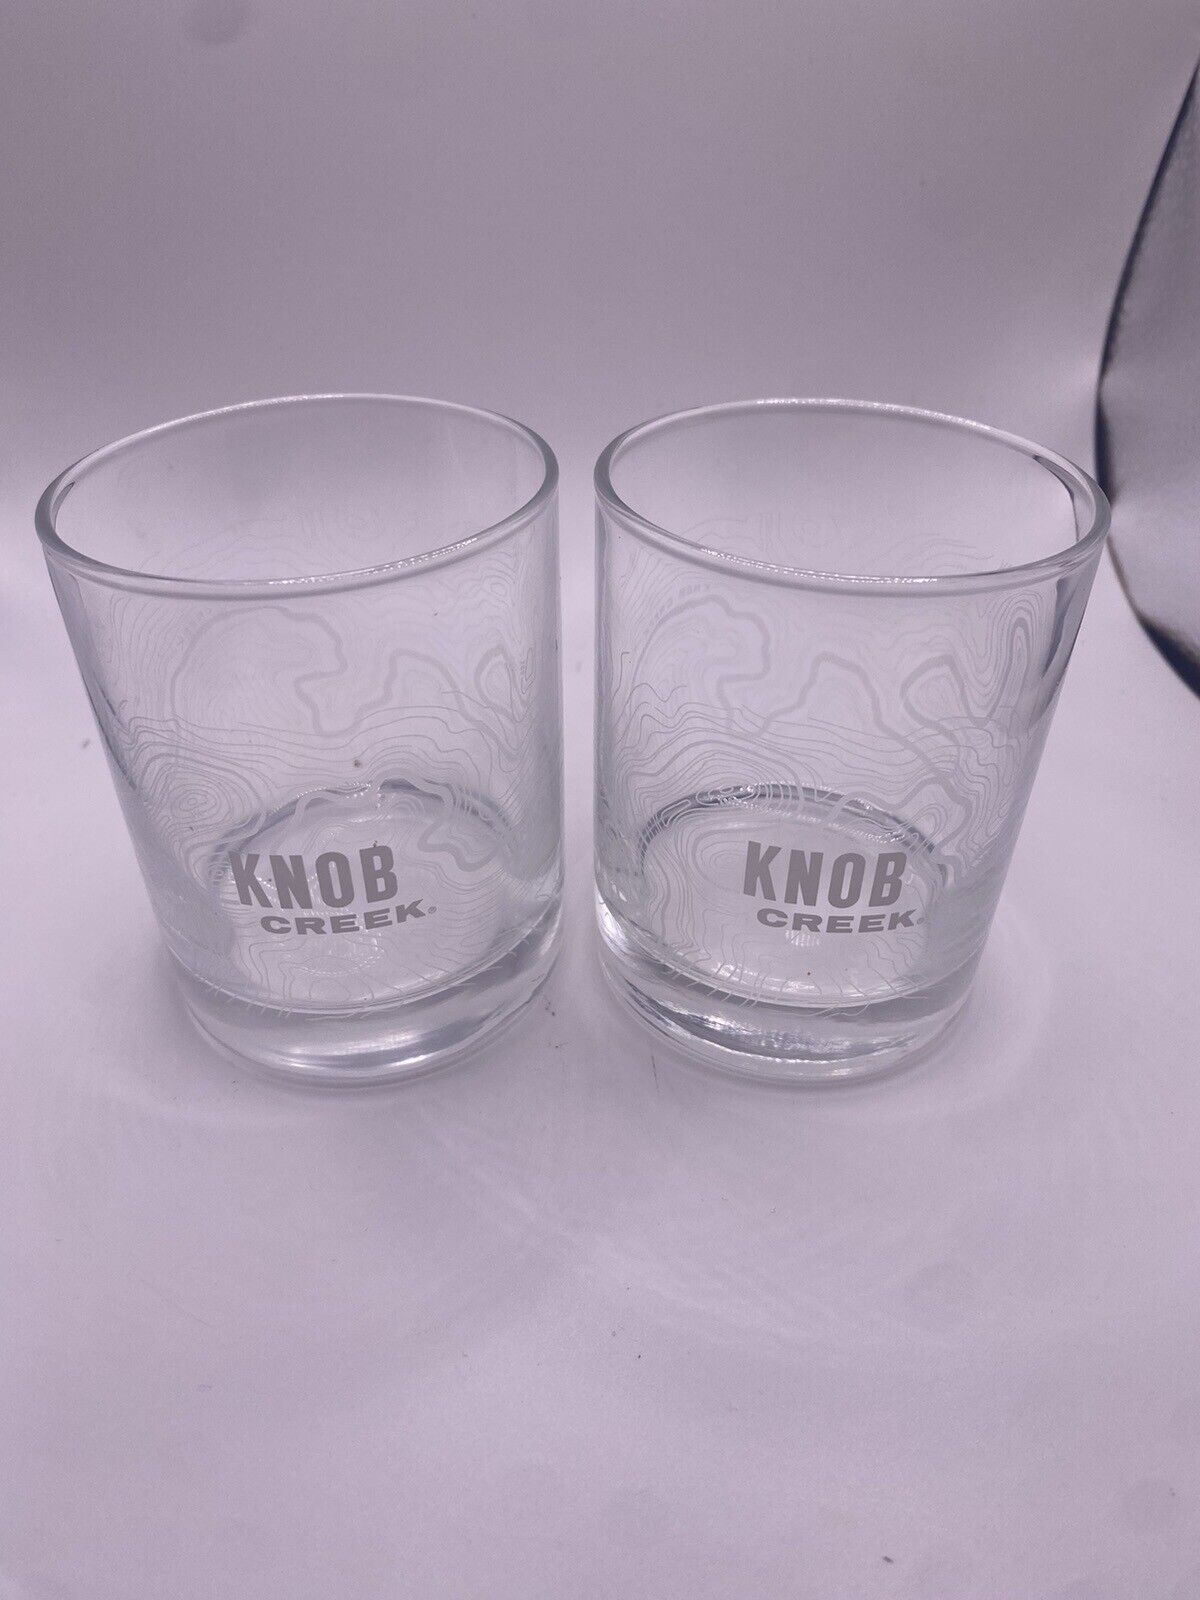 Knob Creek Bourbon Whiskey topography glass set of 2